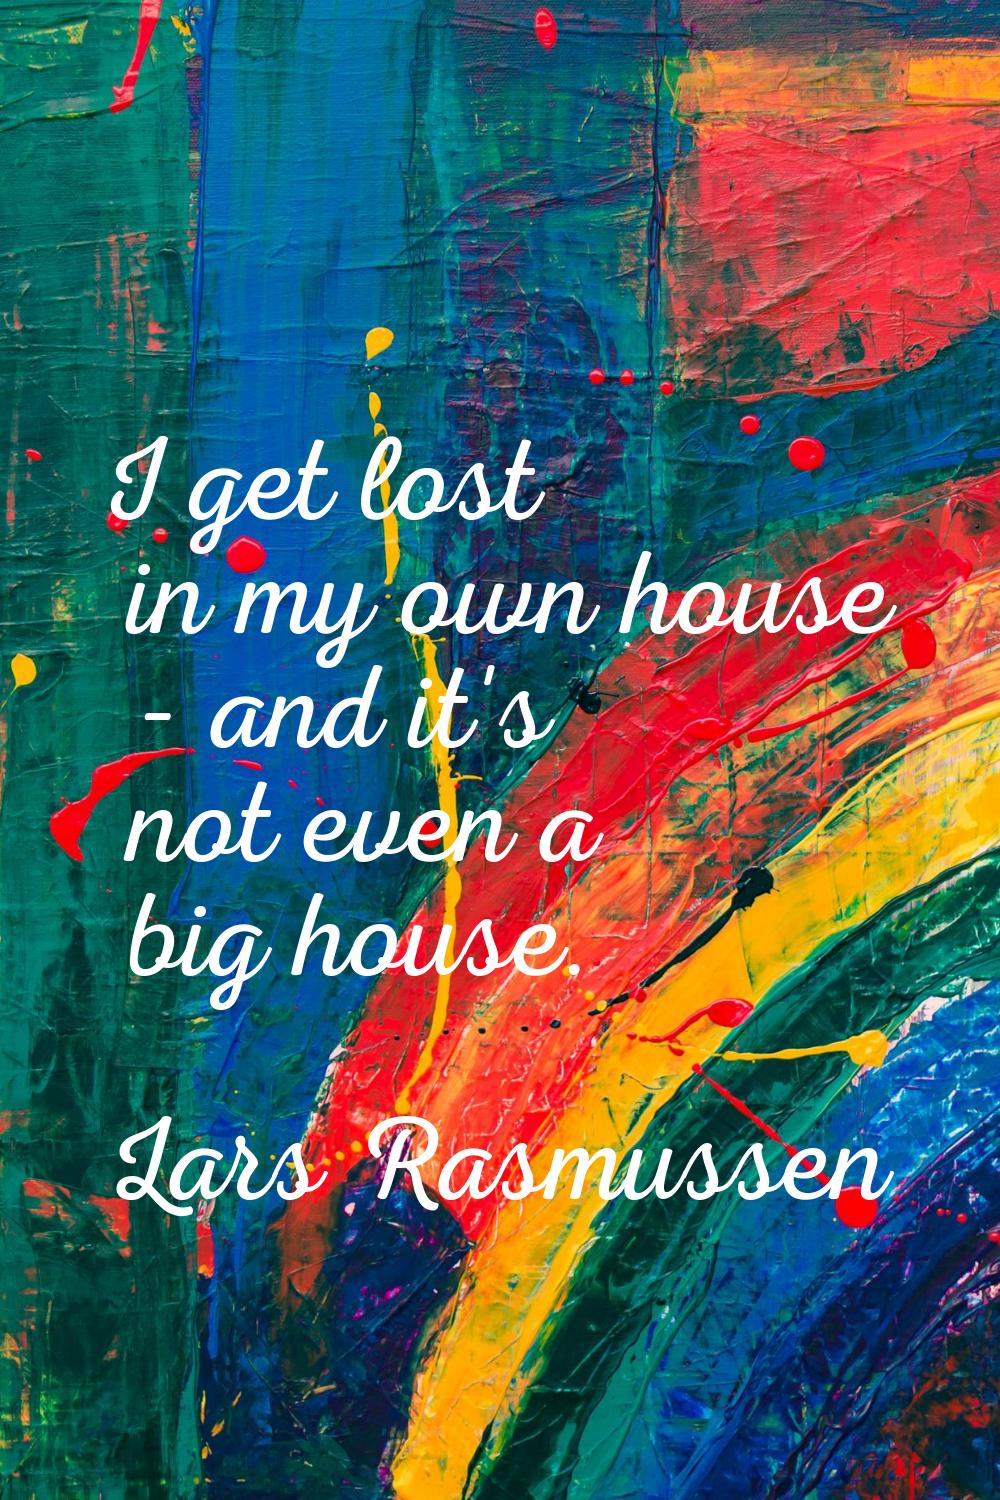 I get lost in my own house - and it's not even a big house.